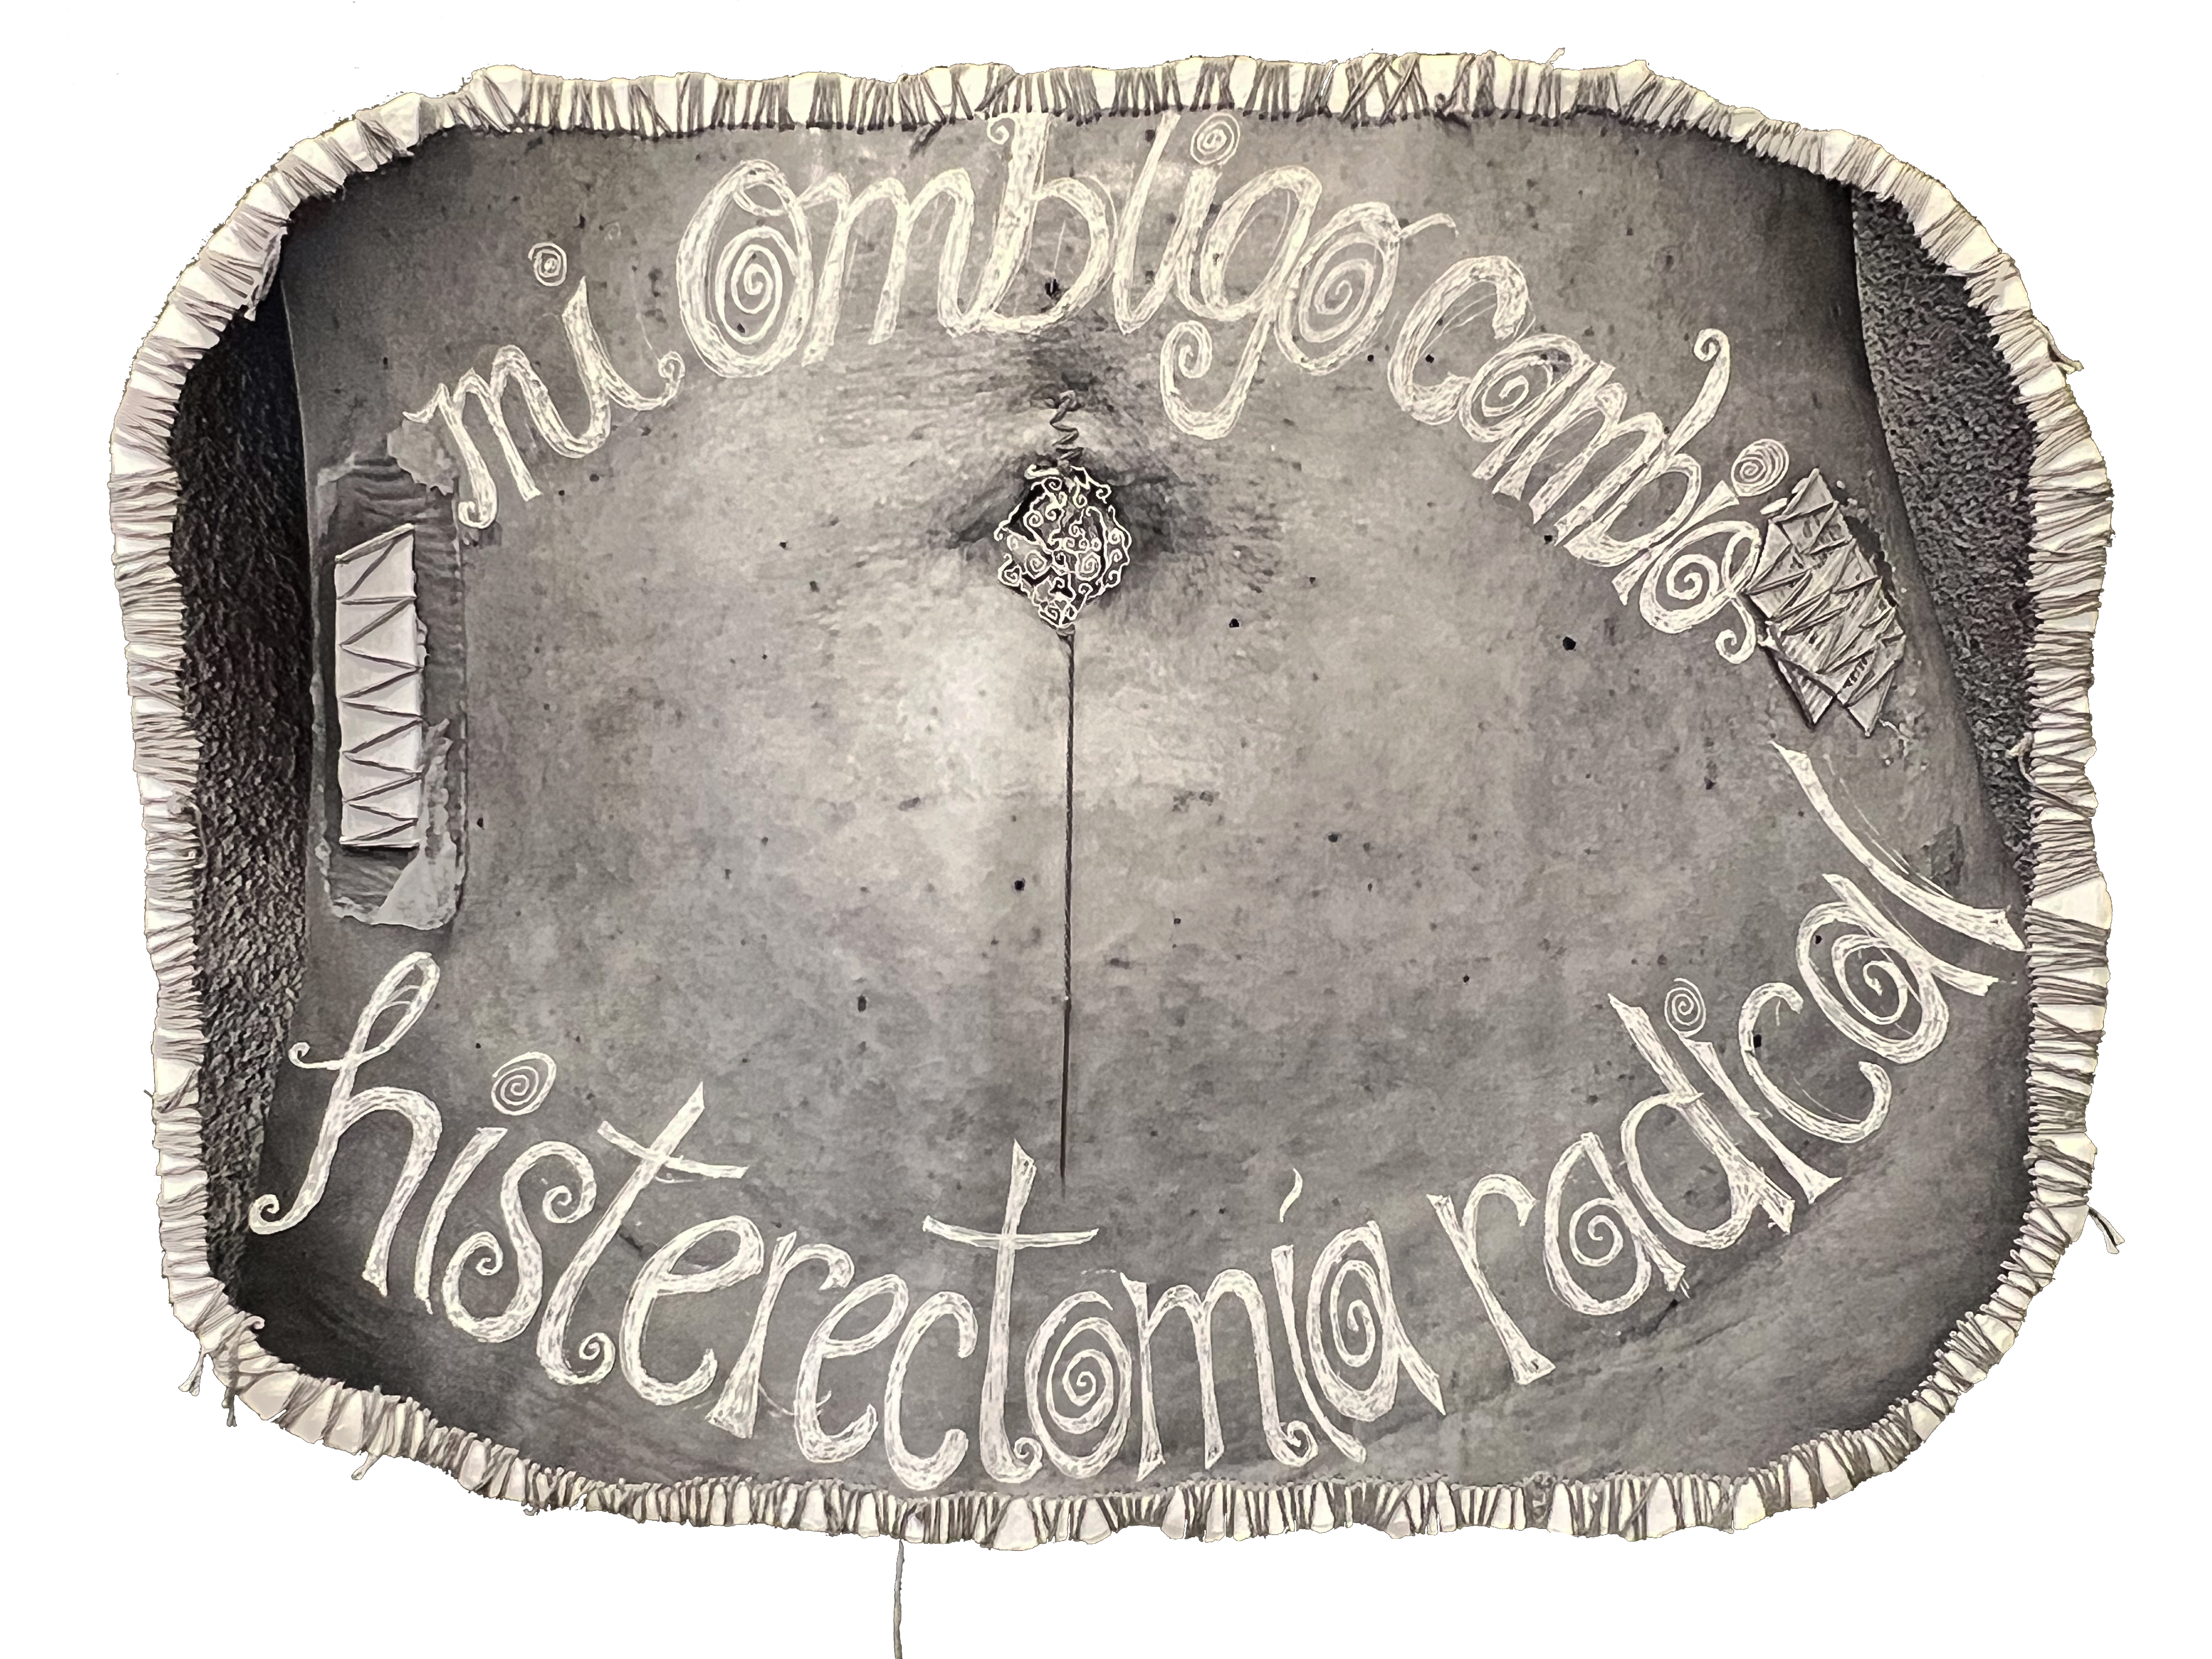 Mi Ombligo cambió - Histerectomía Radical / My navel changed - Radical Hysterectomy